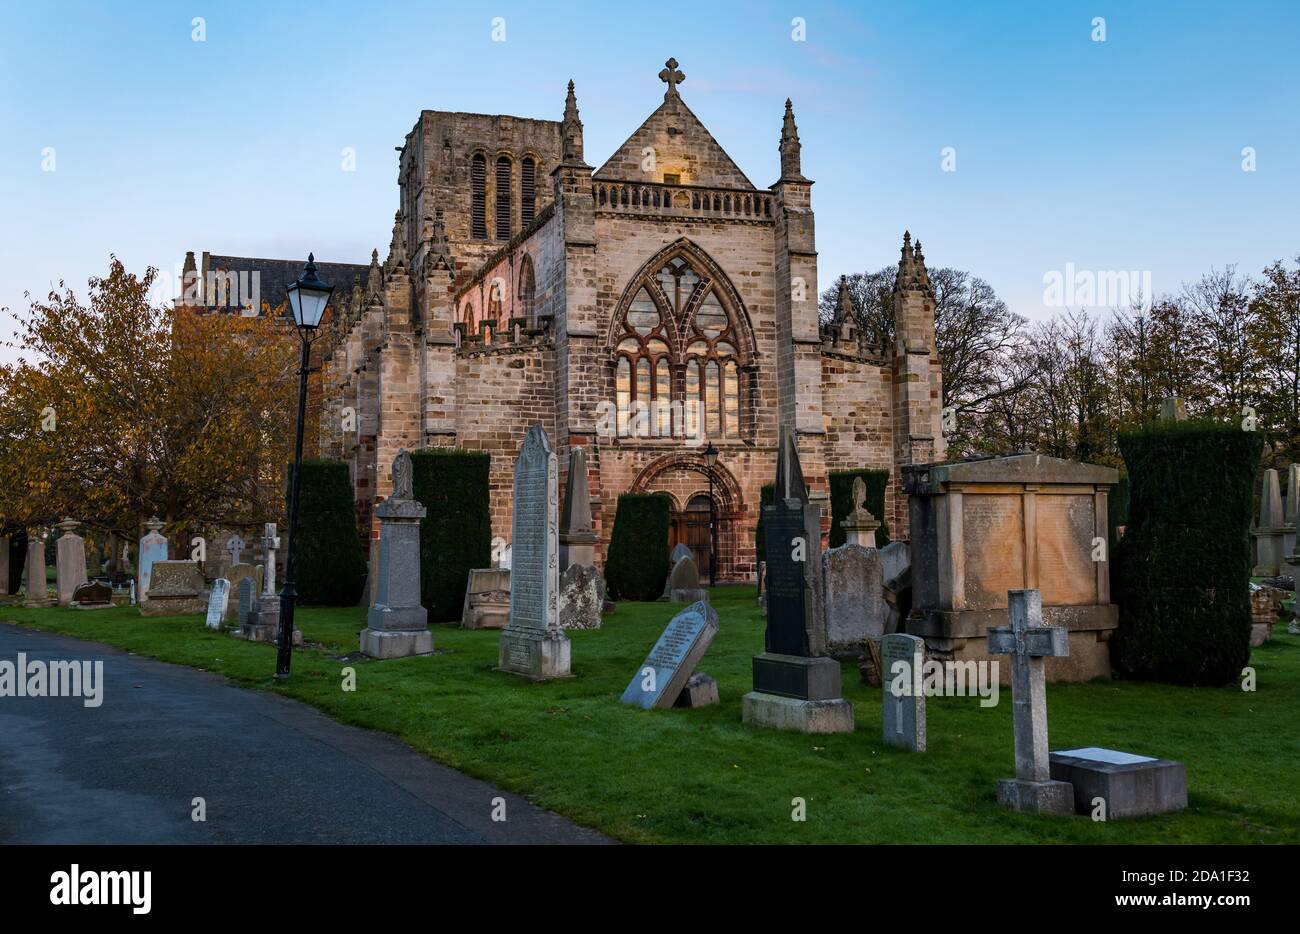 St Mary's Parish Church and graveyard at dusk, Haddington, East Lothian, Scotland, UK Stock Photo